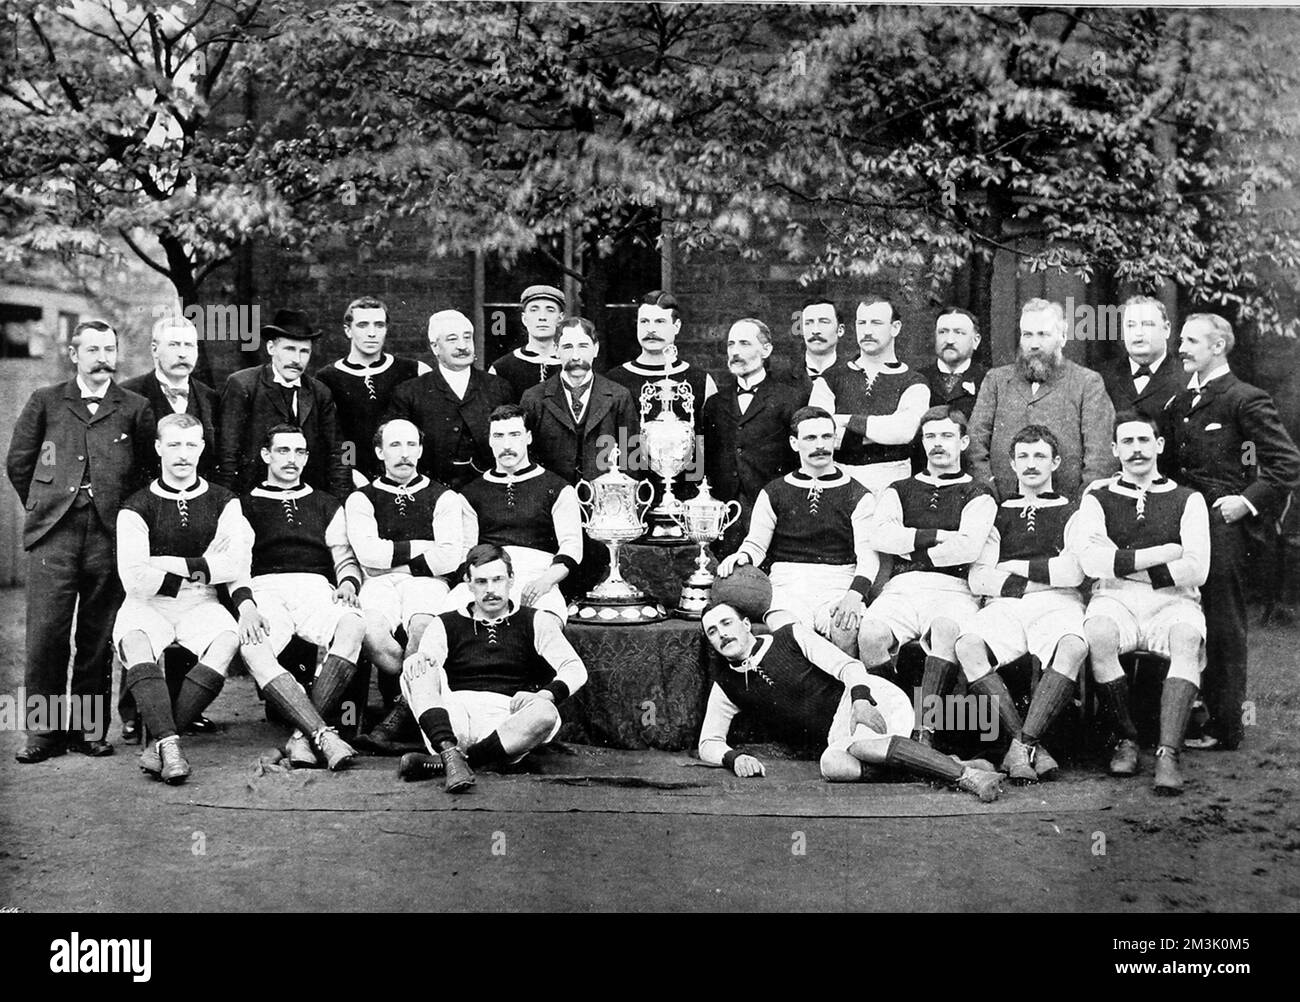 Aston Villa Football Club, con el equipo para la temporada 1896-1897. La fotografía muestra: Fila trasera, de izquierda a derecha: G.B. Ramsay (Secretario), Dr. V.A. Jones, J.Grierson (Entrenador), H.Spencer, F.Cooper, T.Wilkes, J. Ansell (Presidente), D. Hodgetts, J.E. Margoschis (Presidente), C.S. Johnstone, J. Welford, I. Whitehouse, W. McGregor, J.T. Lees, F.W. RINDER. Fila media, sentado, de izquierda a derecha: R. Chatt, J.W. Crabtree, J. Reynolds, Jas. Cowan, J. Devey (Capitán), F. Burton, D. Athersmith, J. Campbell. Primera fila, en el suelo, de izquierda a derecha: S. Smith, John Cowan. 1896 Foto de stock